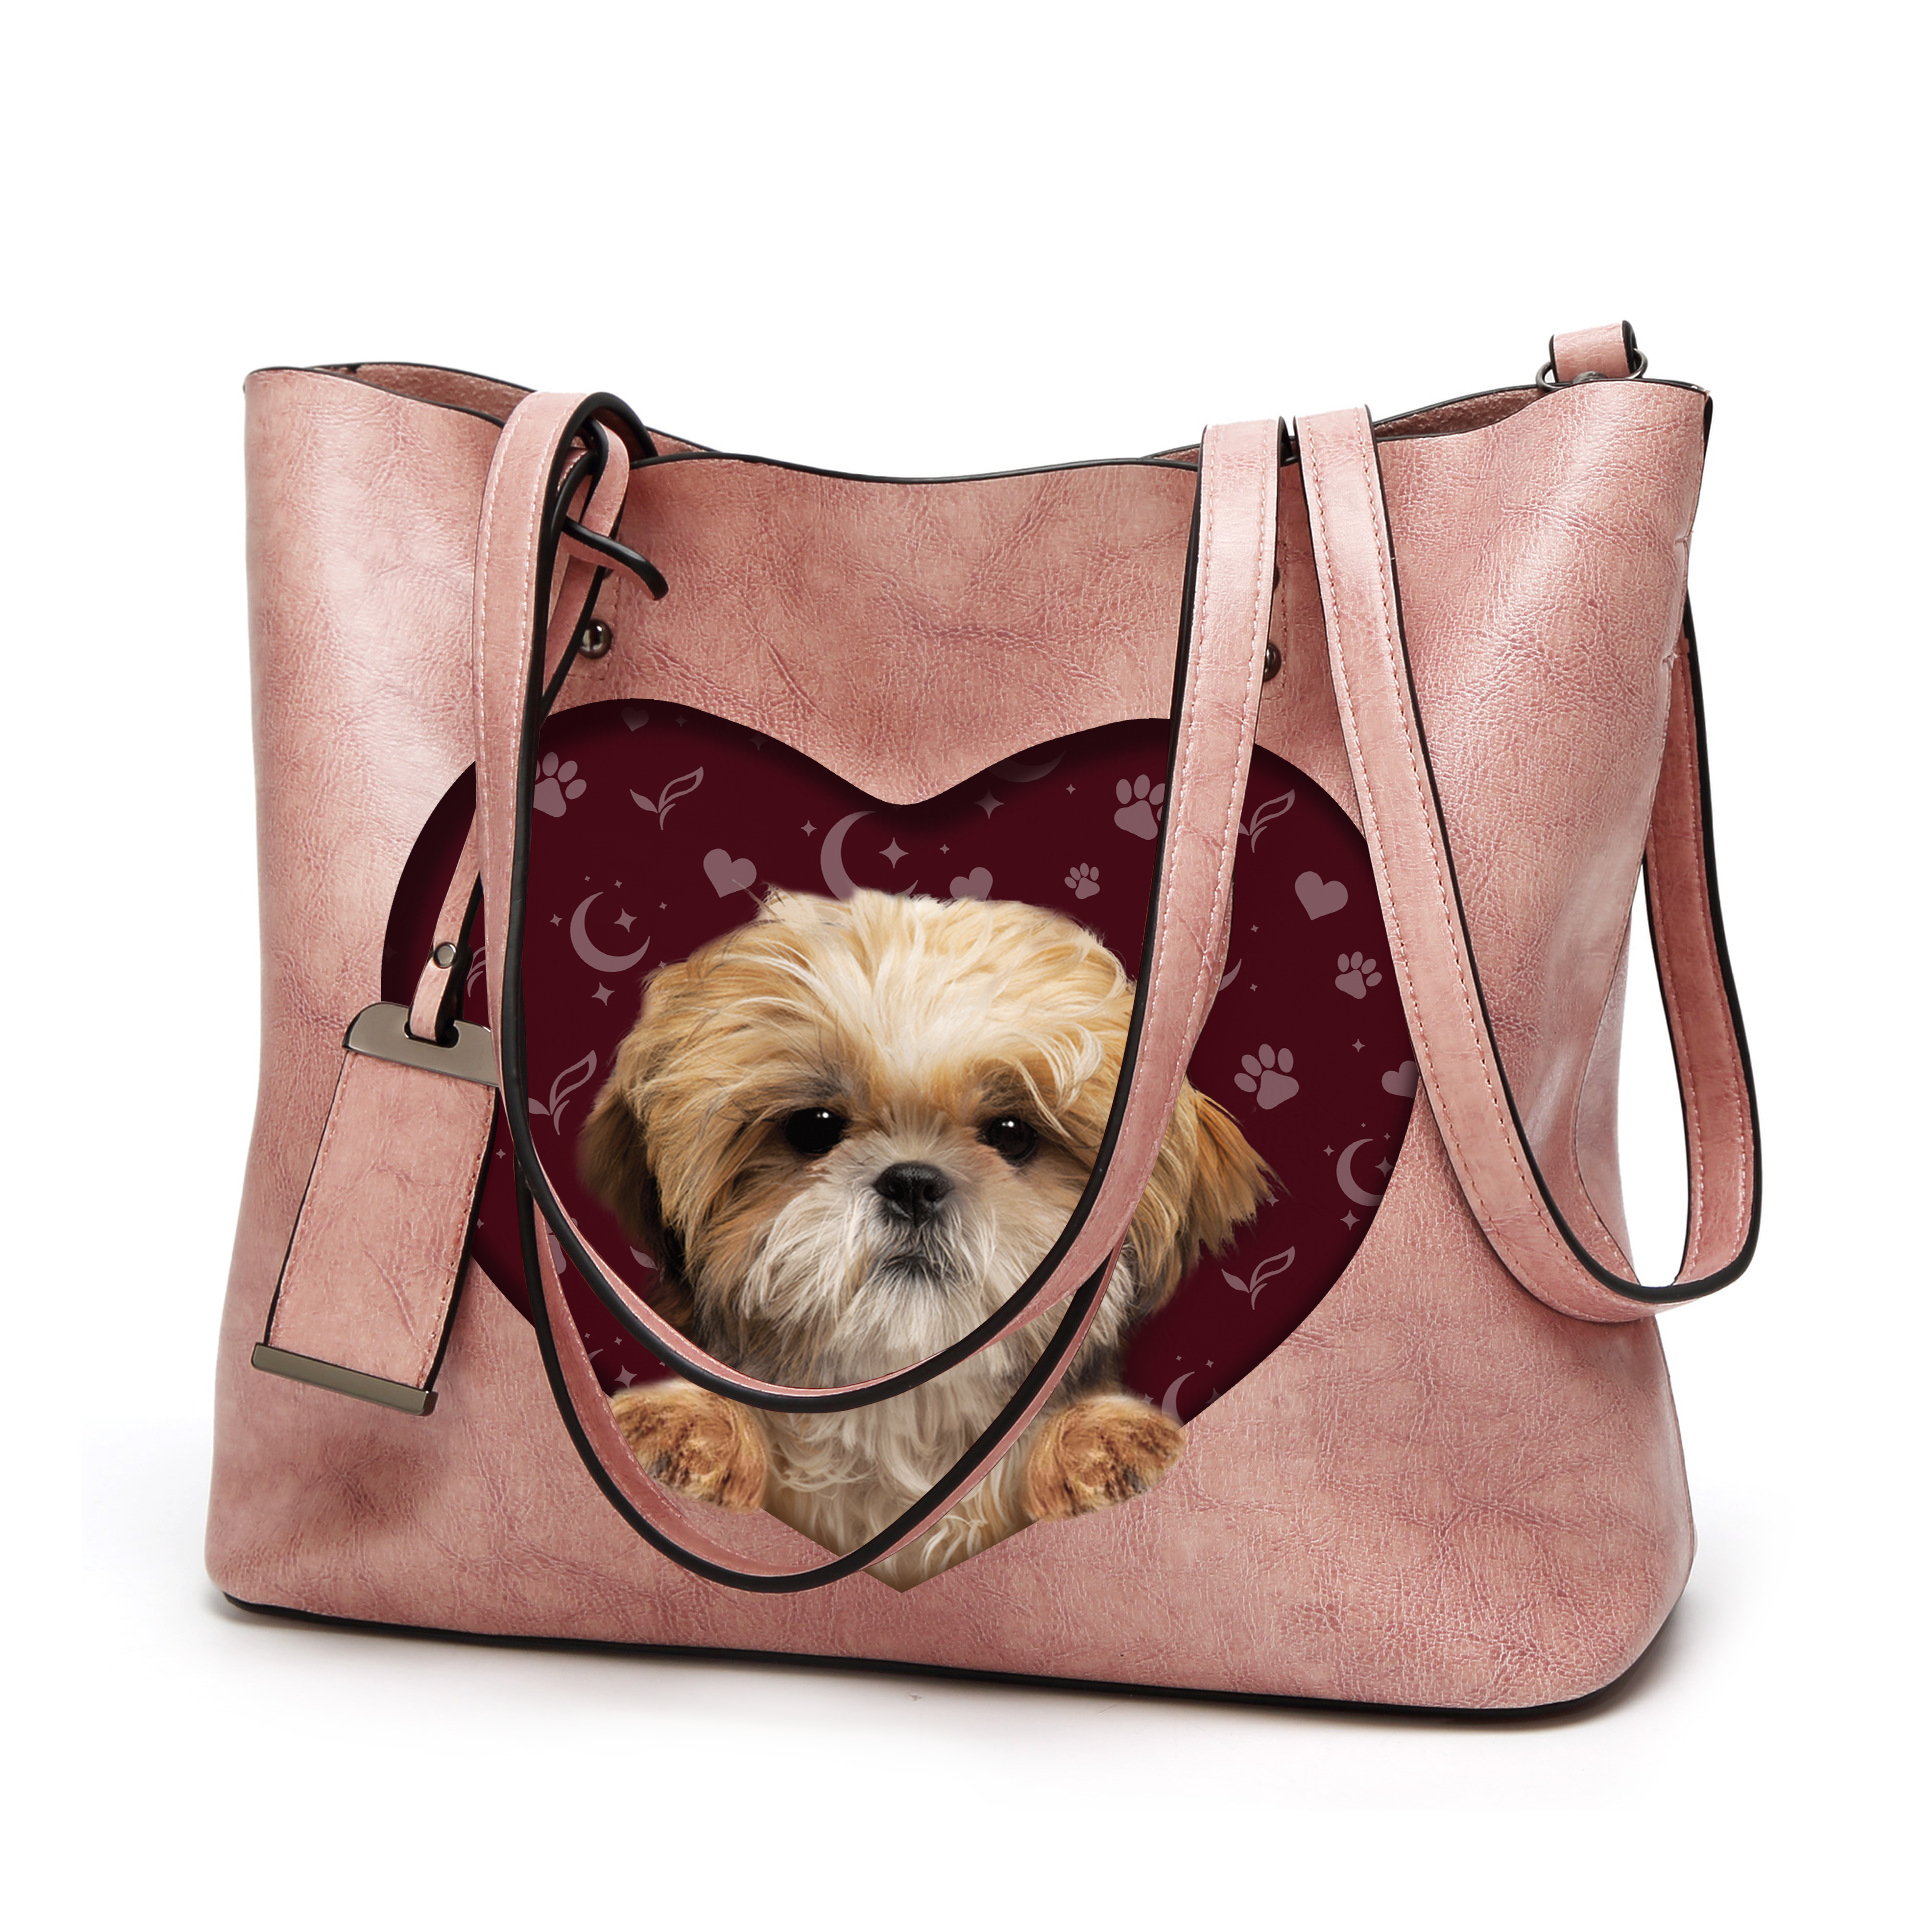 I Know I'm Cute - Shih Tzu Glamour Handbag V1 - 8